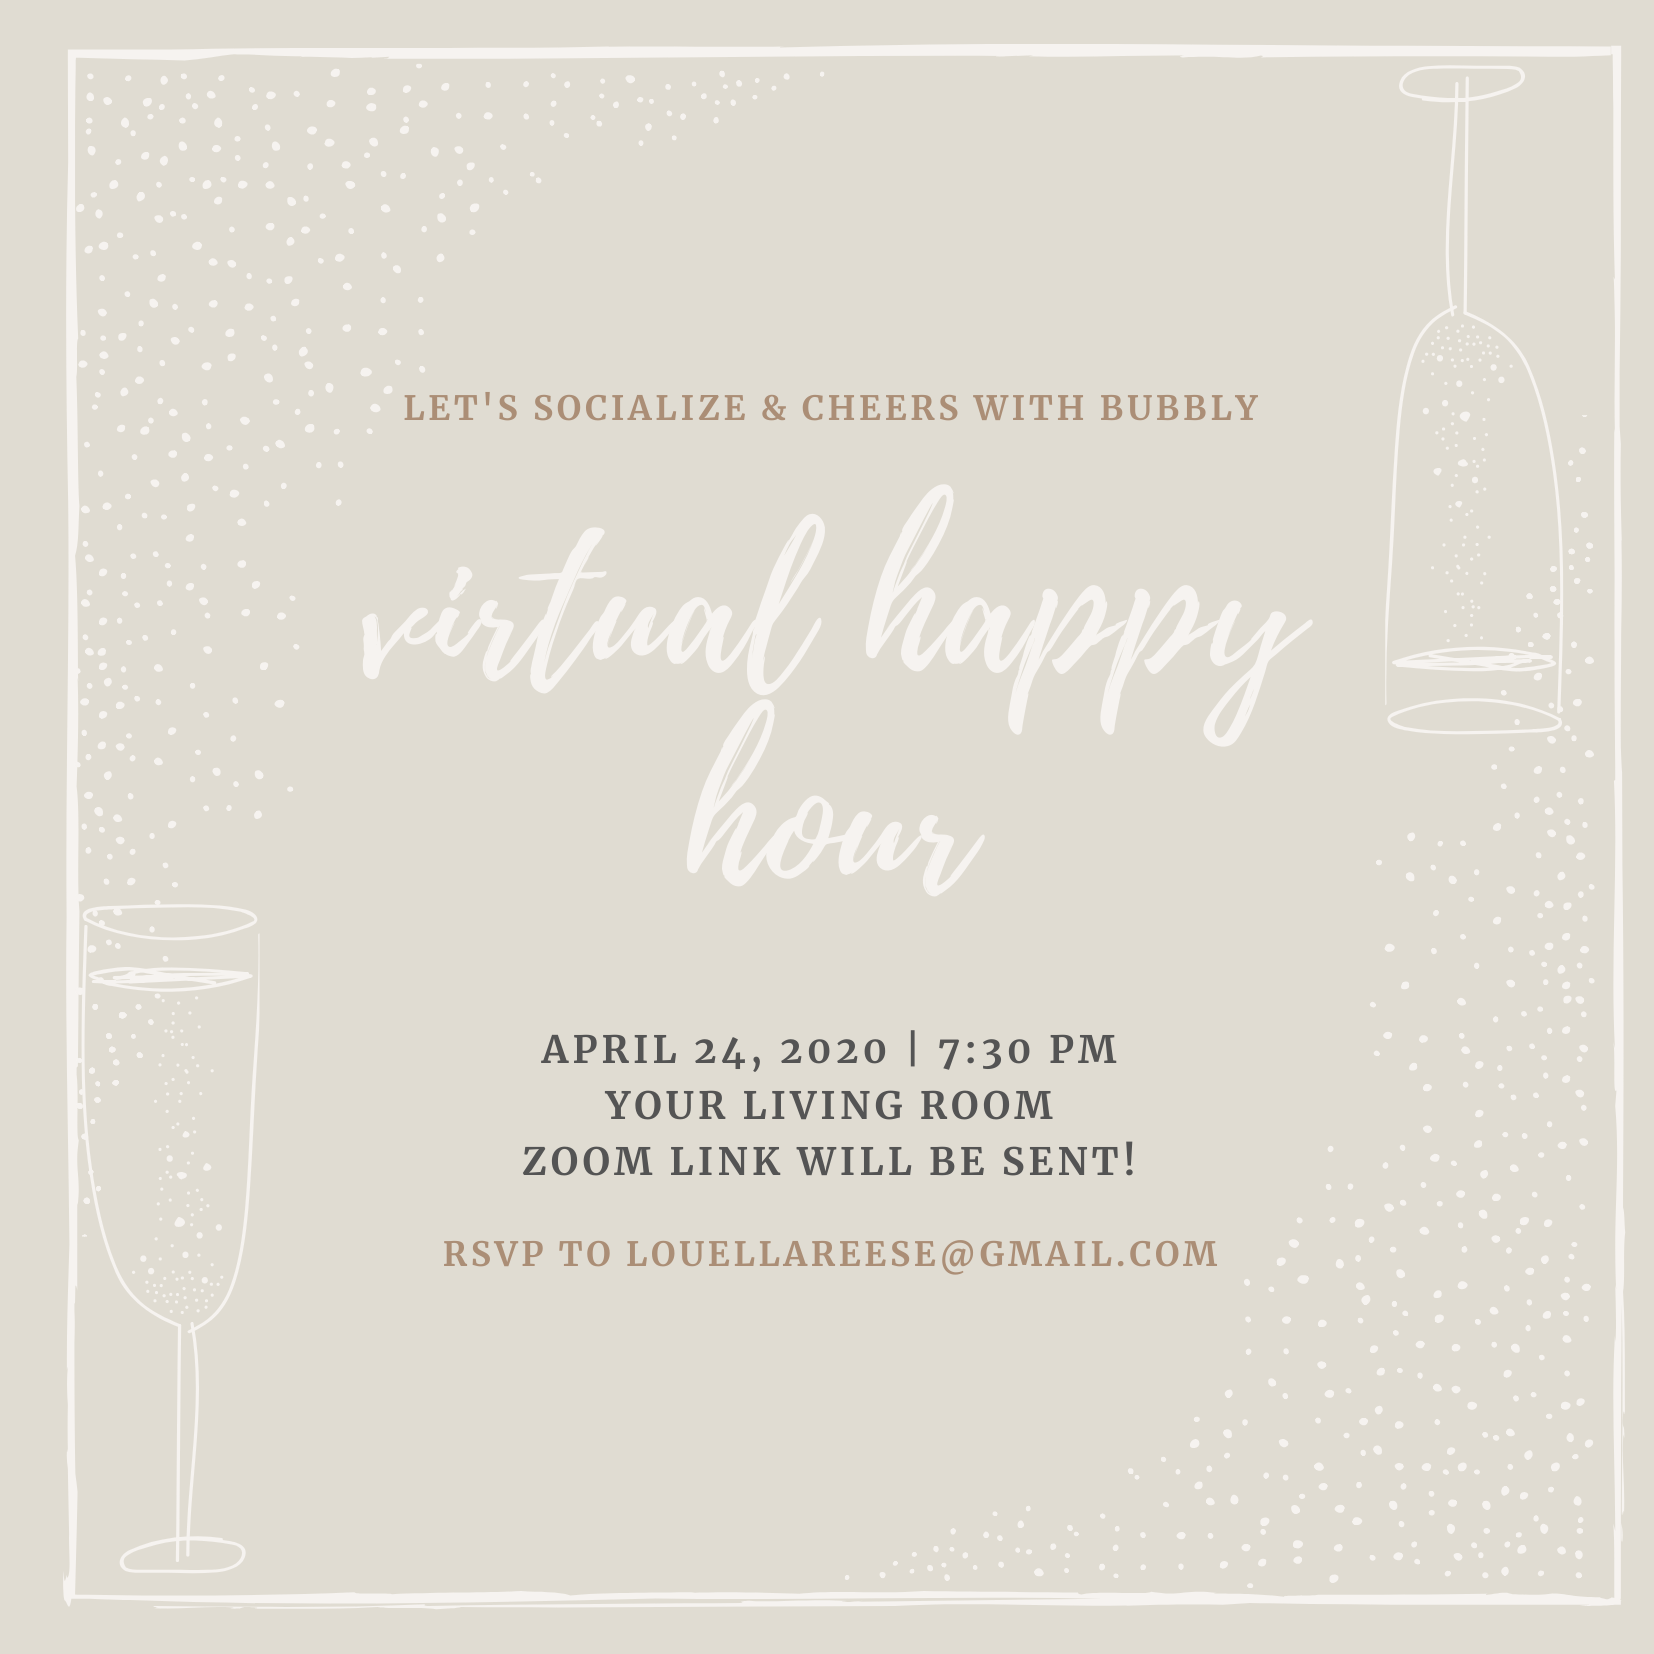 Virtual Happy Hour Invitation | Louella Reese